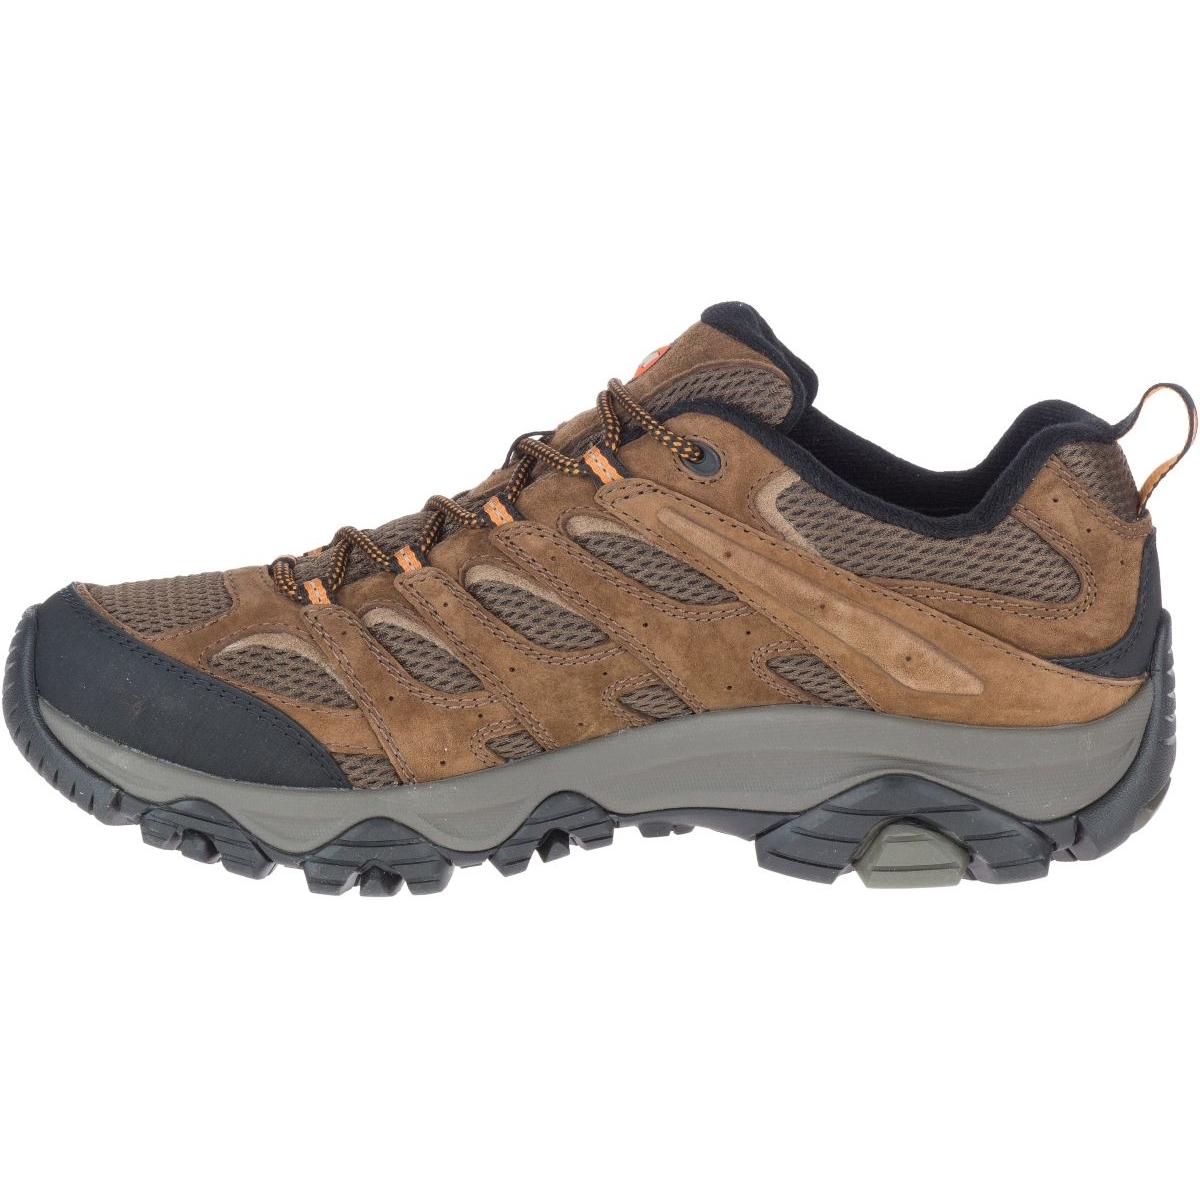 Merrell Men's Moab 3 GORE-TEX Hiking Shoe Earth - J036257 EARTH - Brown, 10